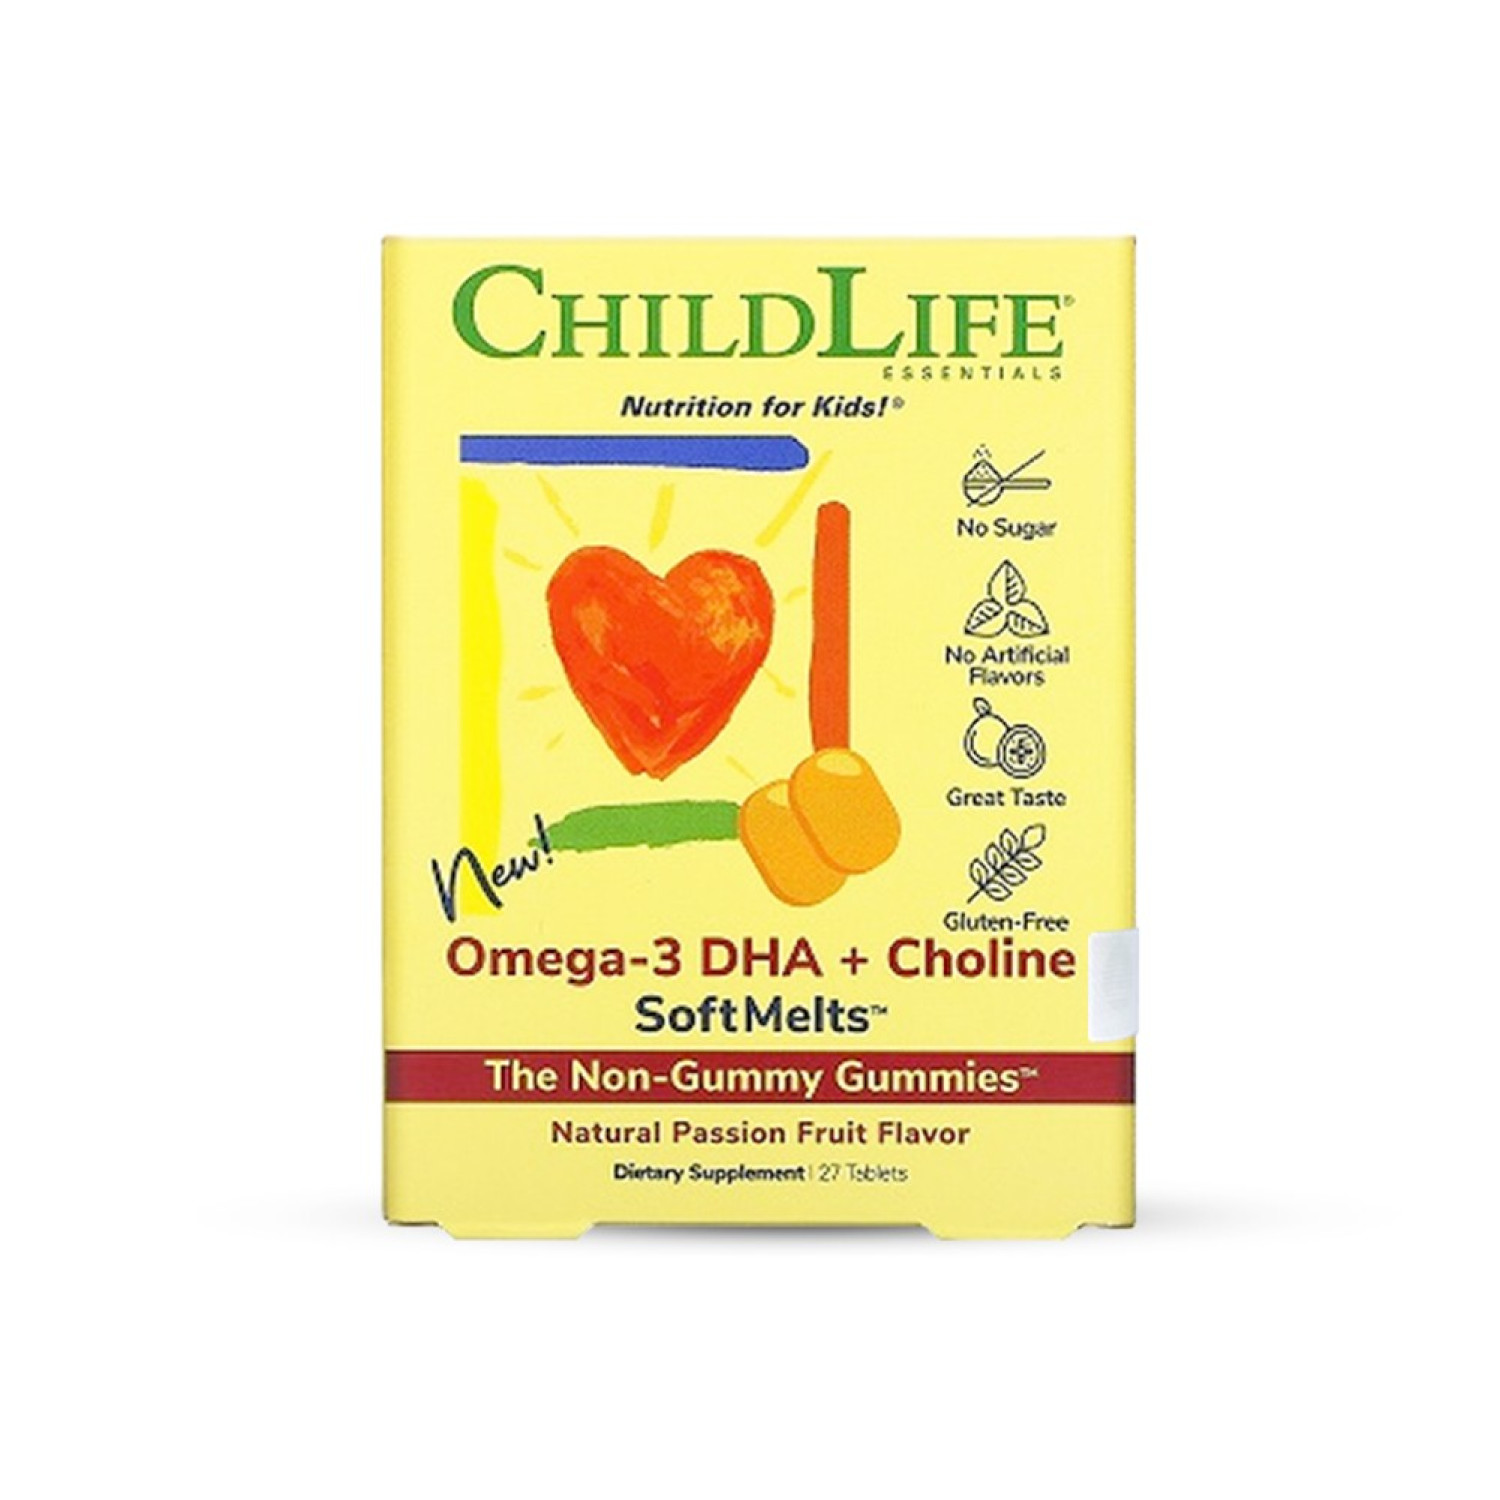 Childlife ChildLife Omega 3 DHA+Choline Gummies